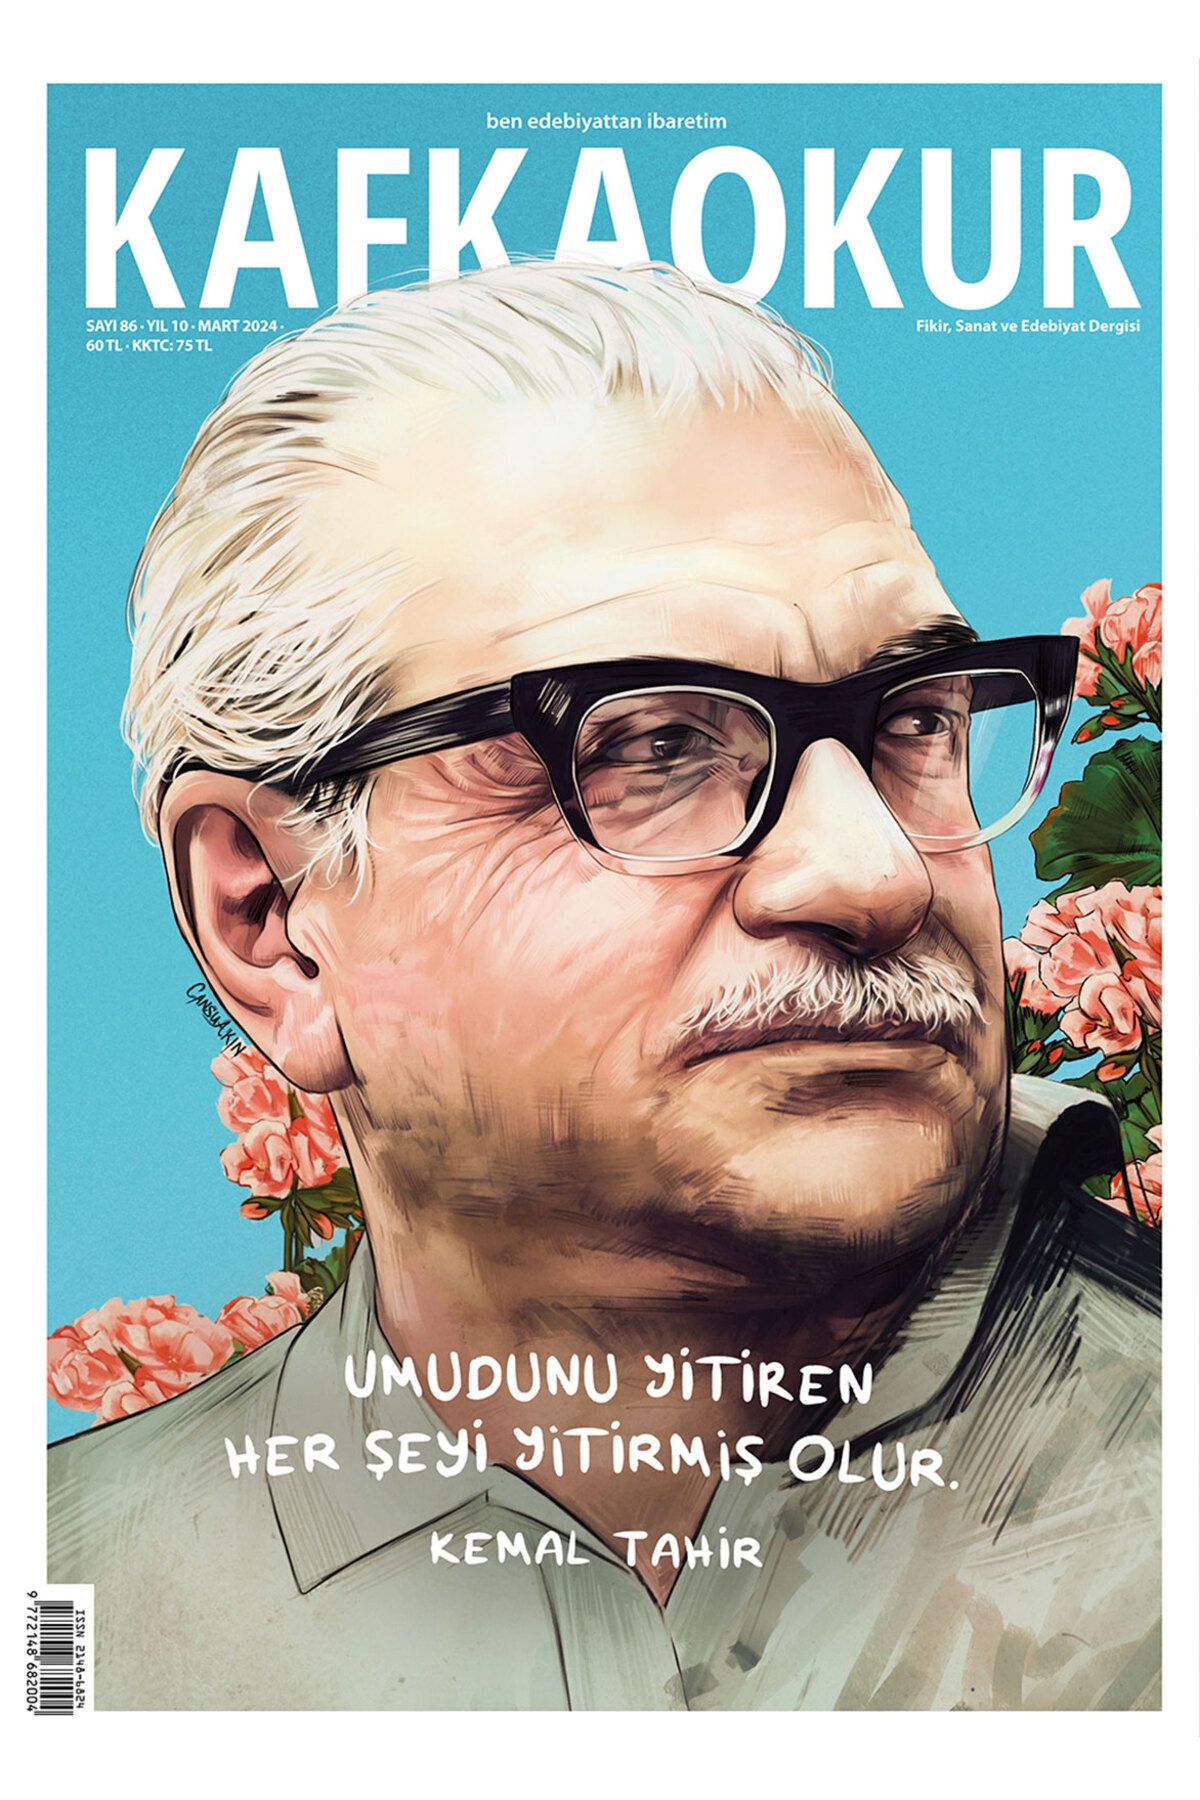 KafkaOkur Dergisi Sayı 86 - Kemal Tahir - Mart 2024